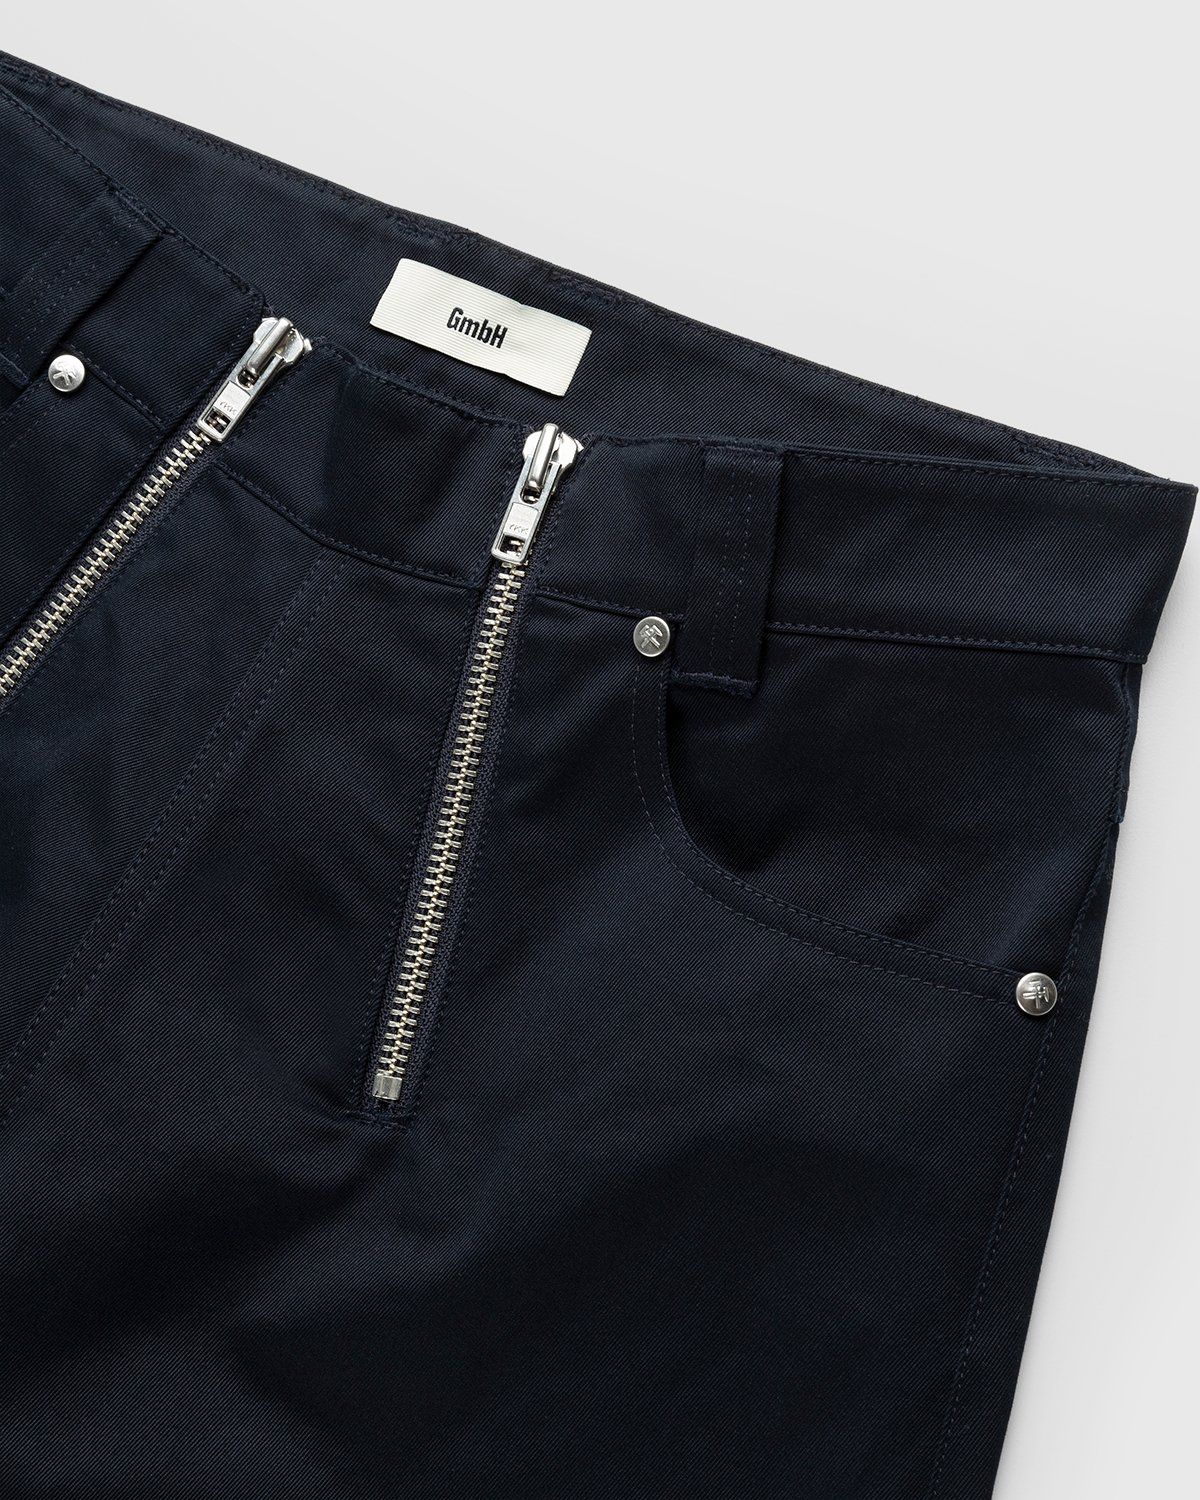 GmbH – Alvan Denim Trousers Navy - Denim - Blue - Image 5